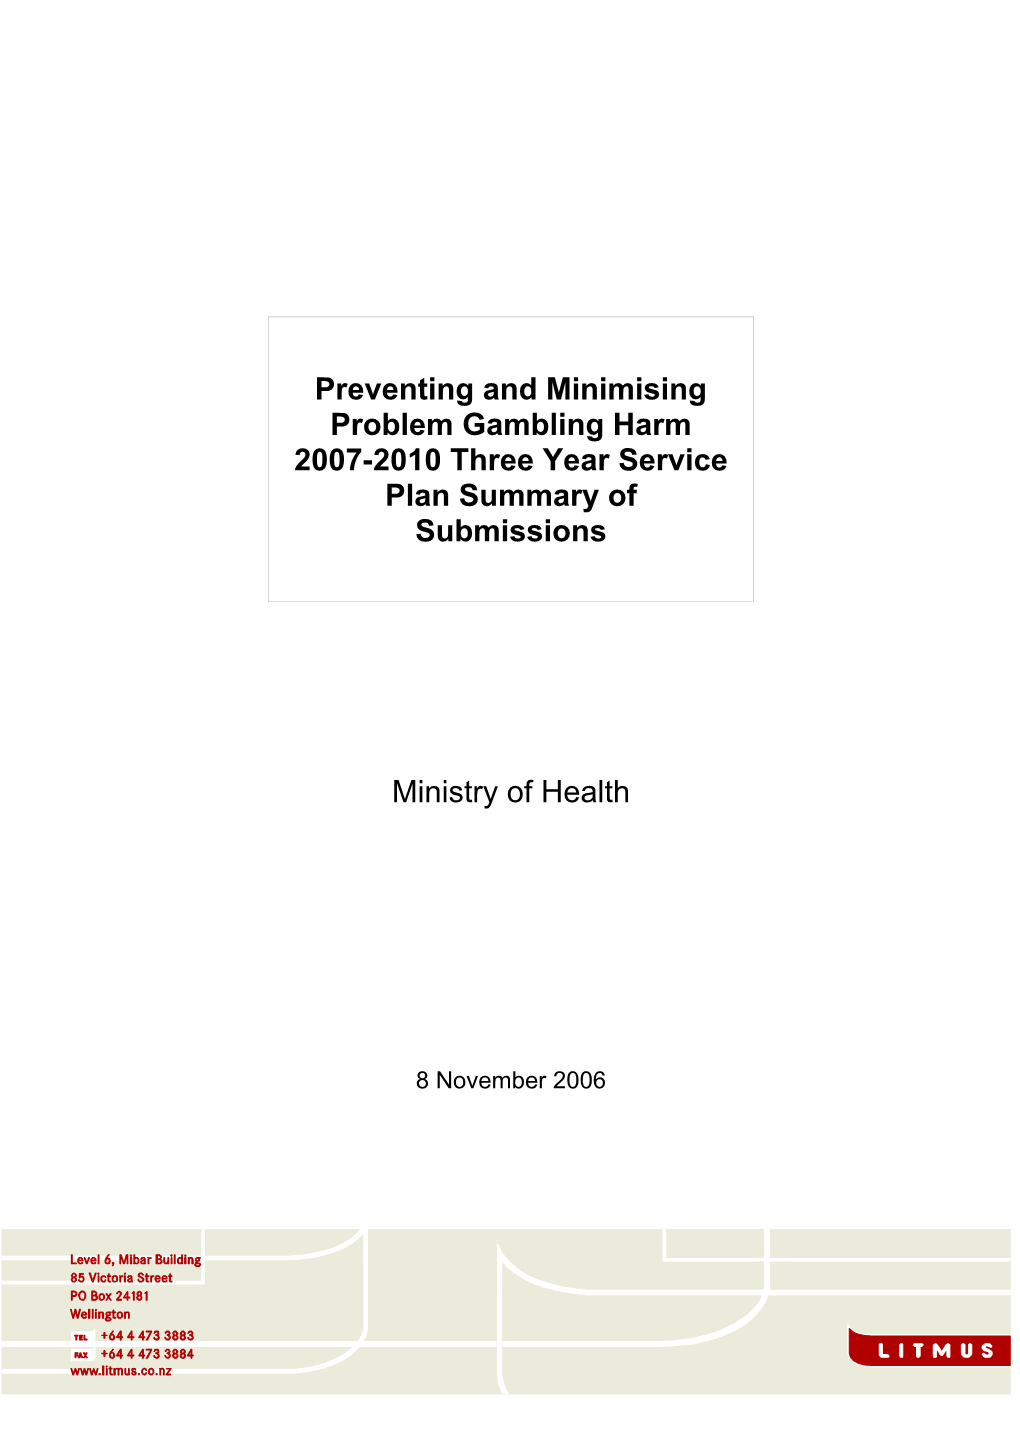 Preventing and Minismising Problem Gambling Harm 2007-2010 Three Year Service Plan: Summary